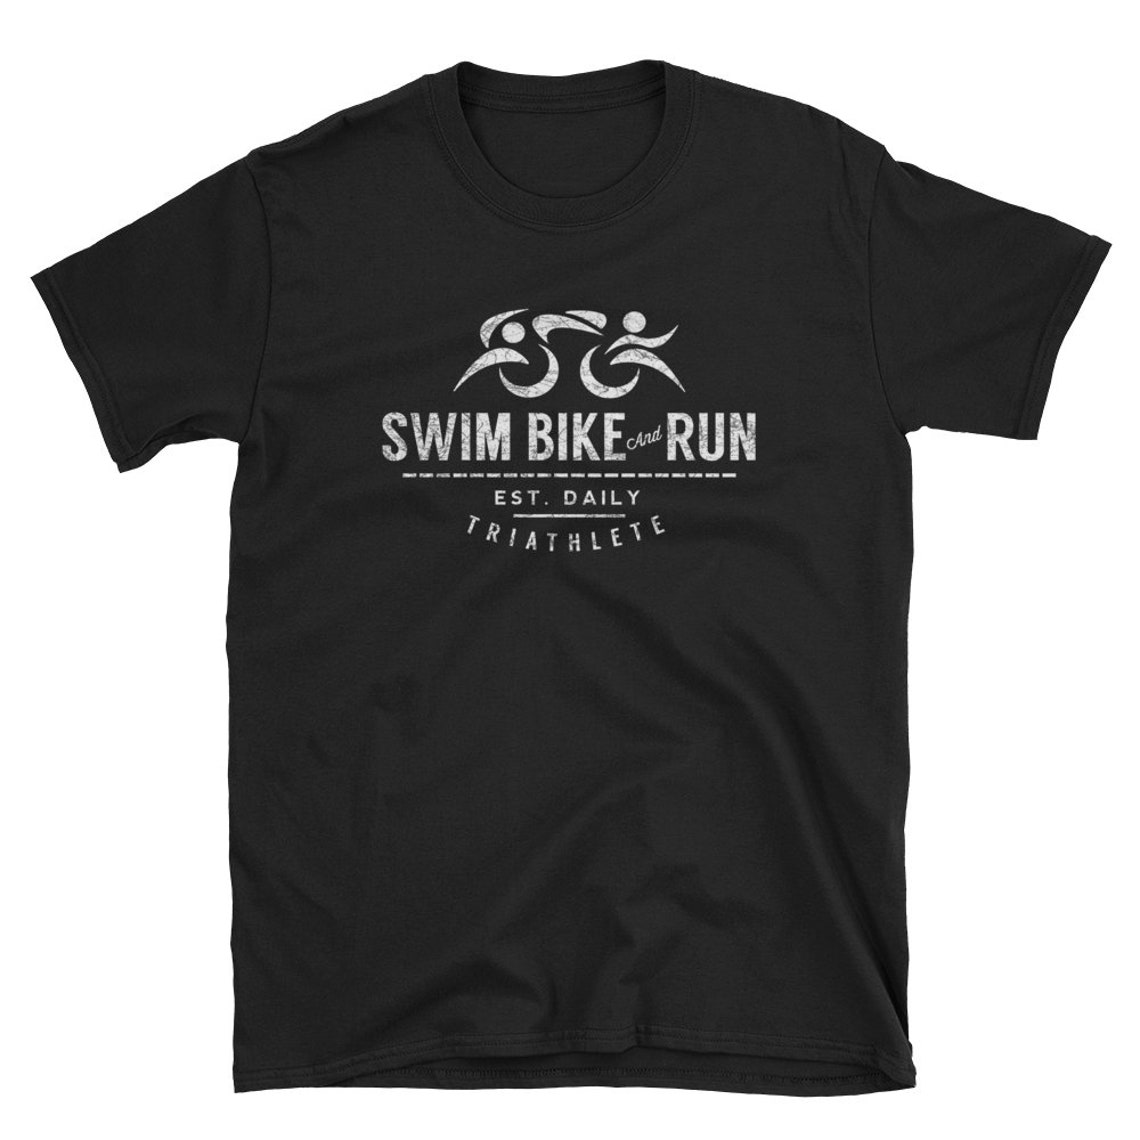 Triathlon Triathlete Classic Design Tshirt vintage Look Swim Bike Run ...